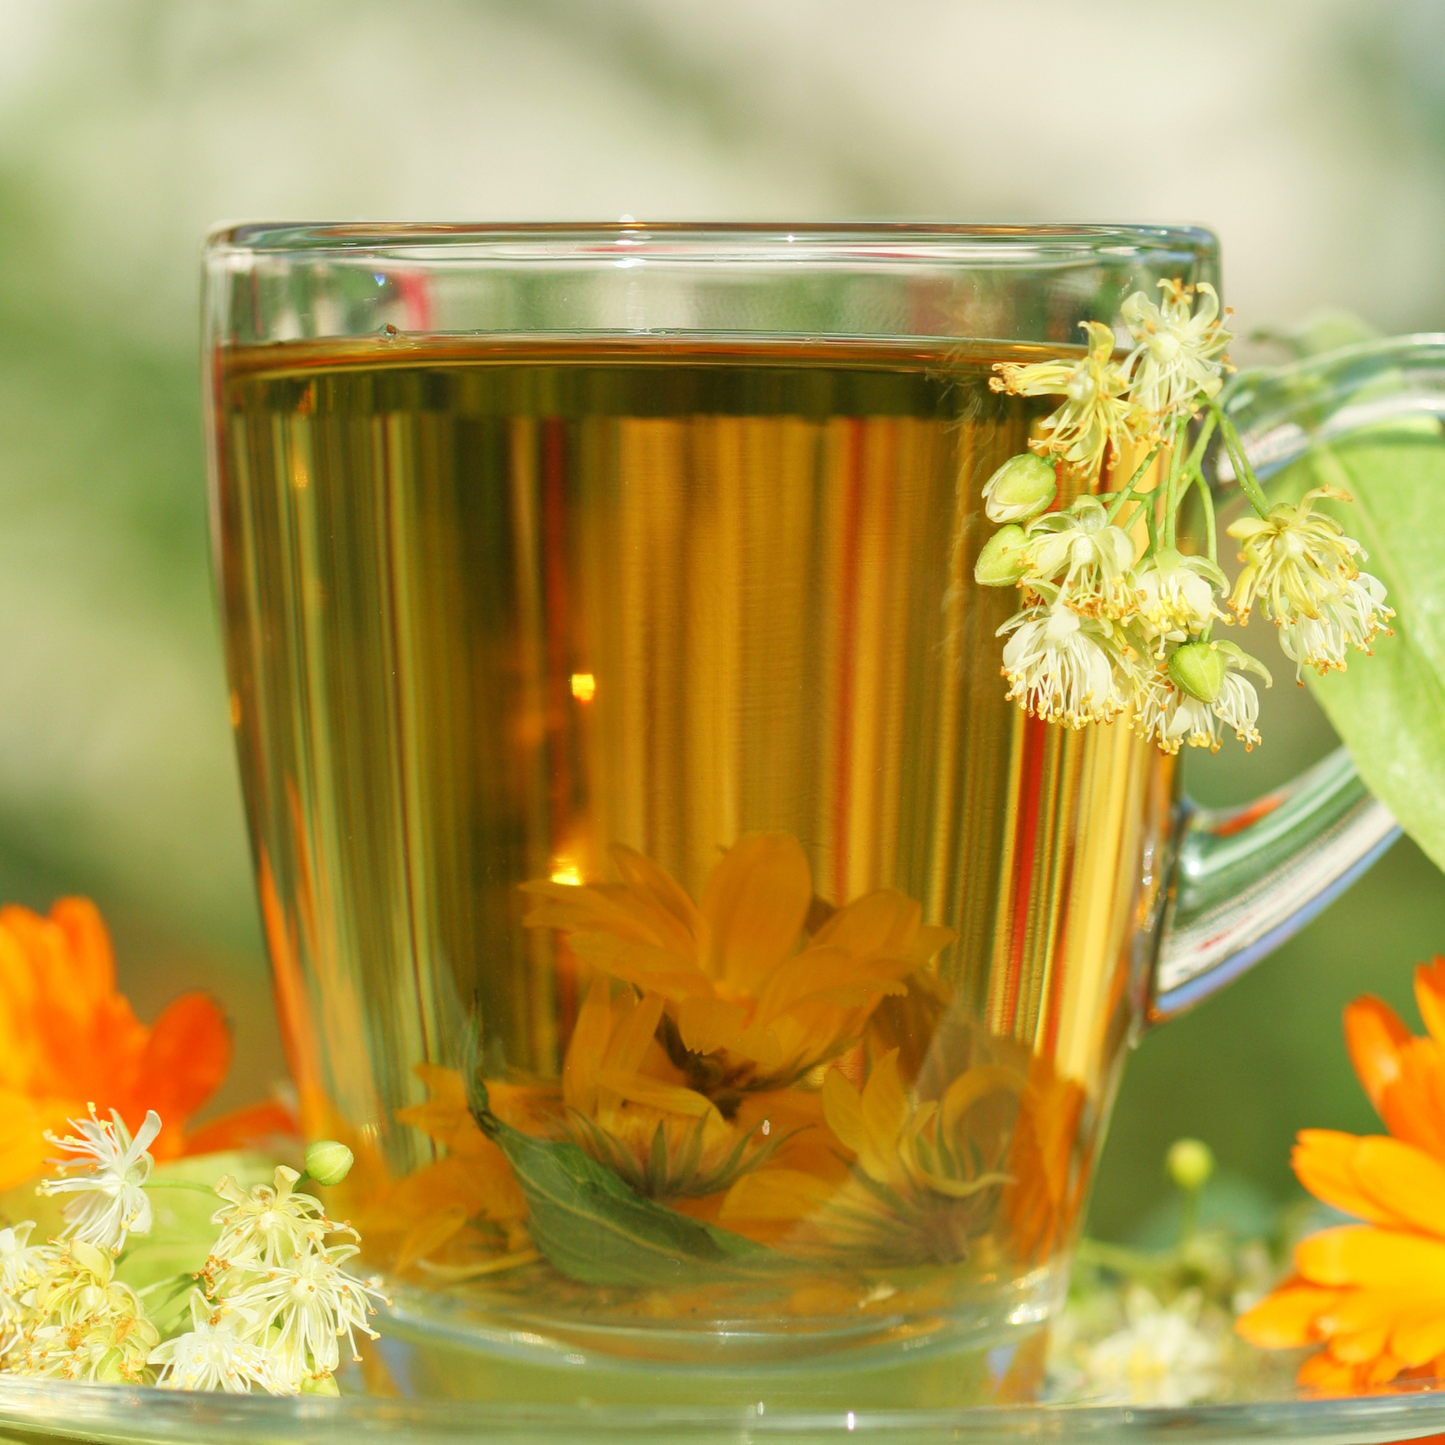 Marigold Flower Petal Loose Leaf Calendula Herbal Tea For Wealth Rituals, Caffeine Free